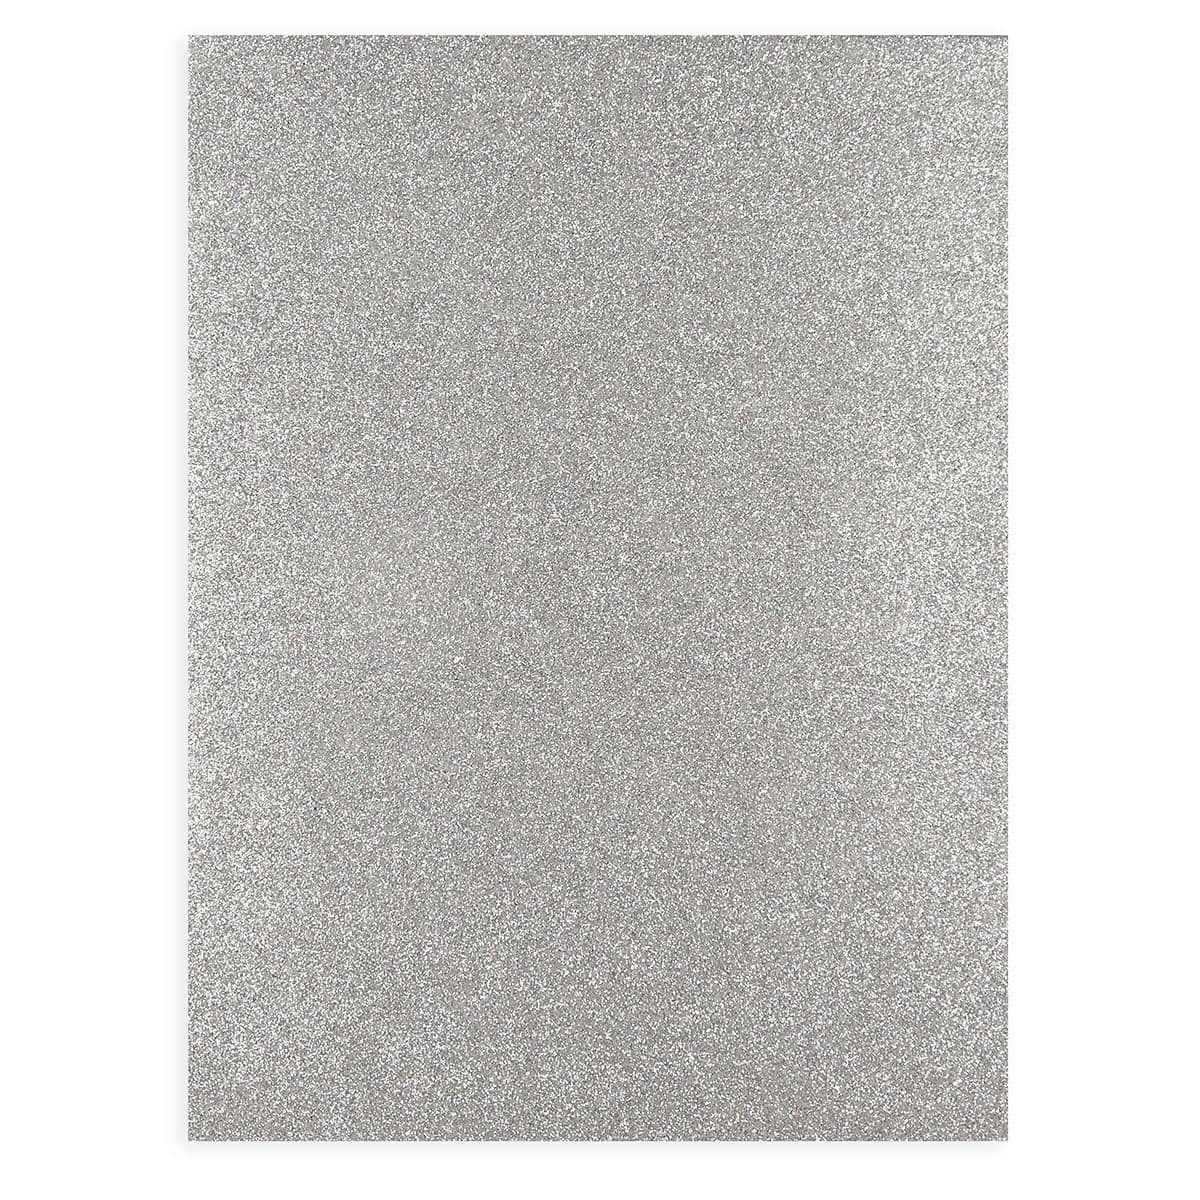 15.5 x 19.5 White Glitter Foam Sheets - Pack of 10 Glitter Foam Sheets -  CB Flowers & Crafts